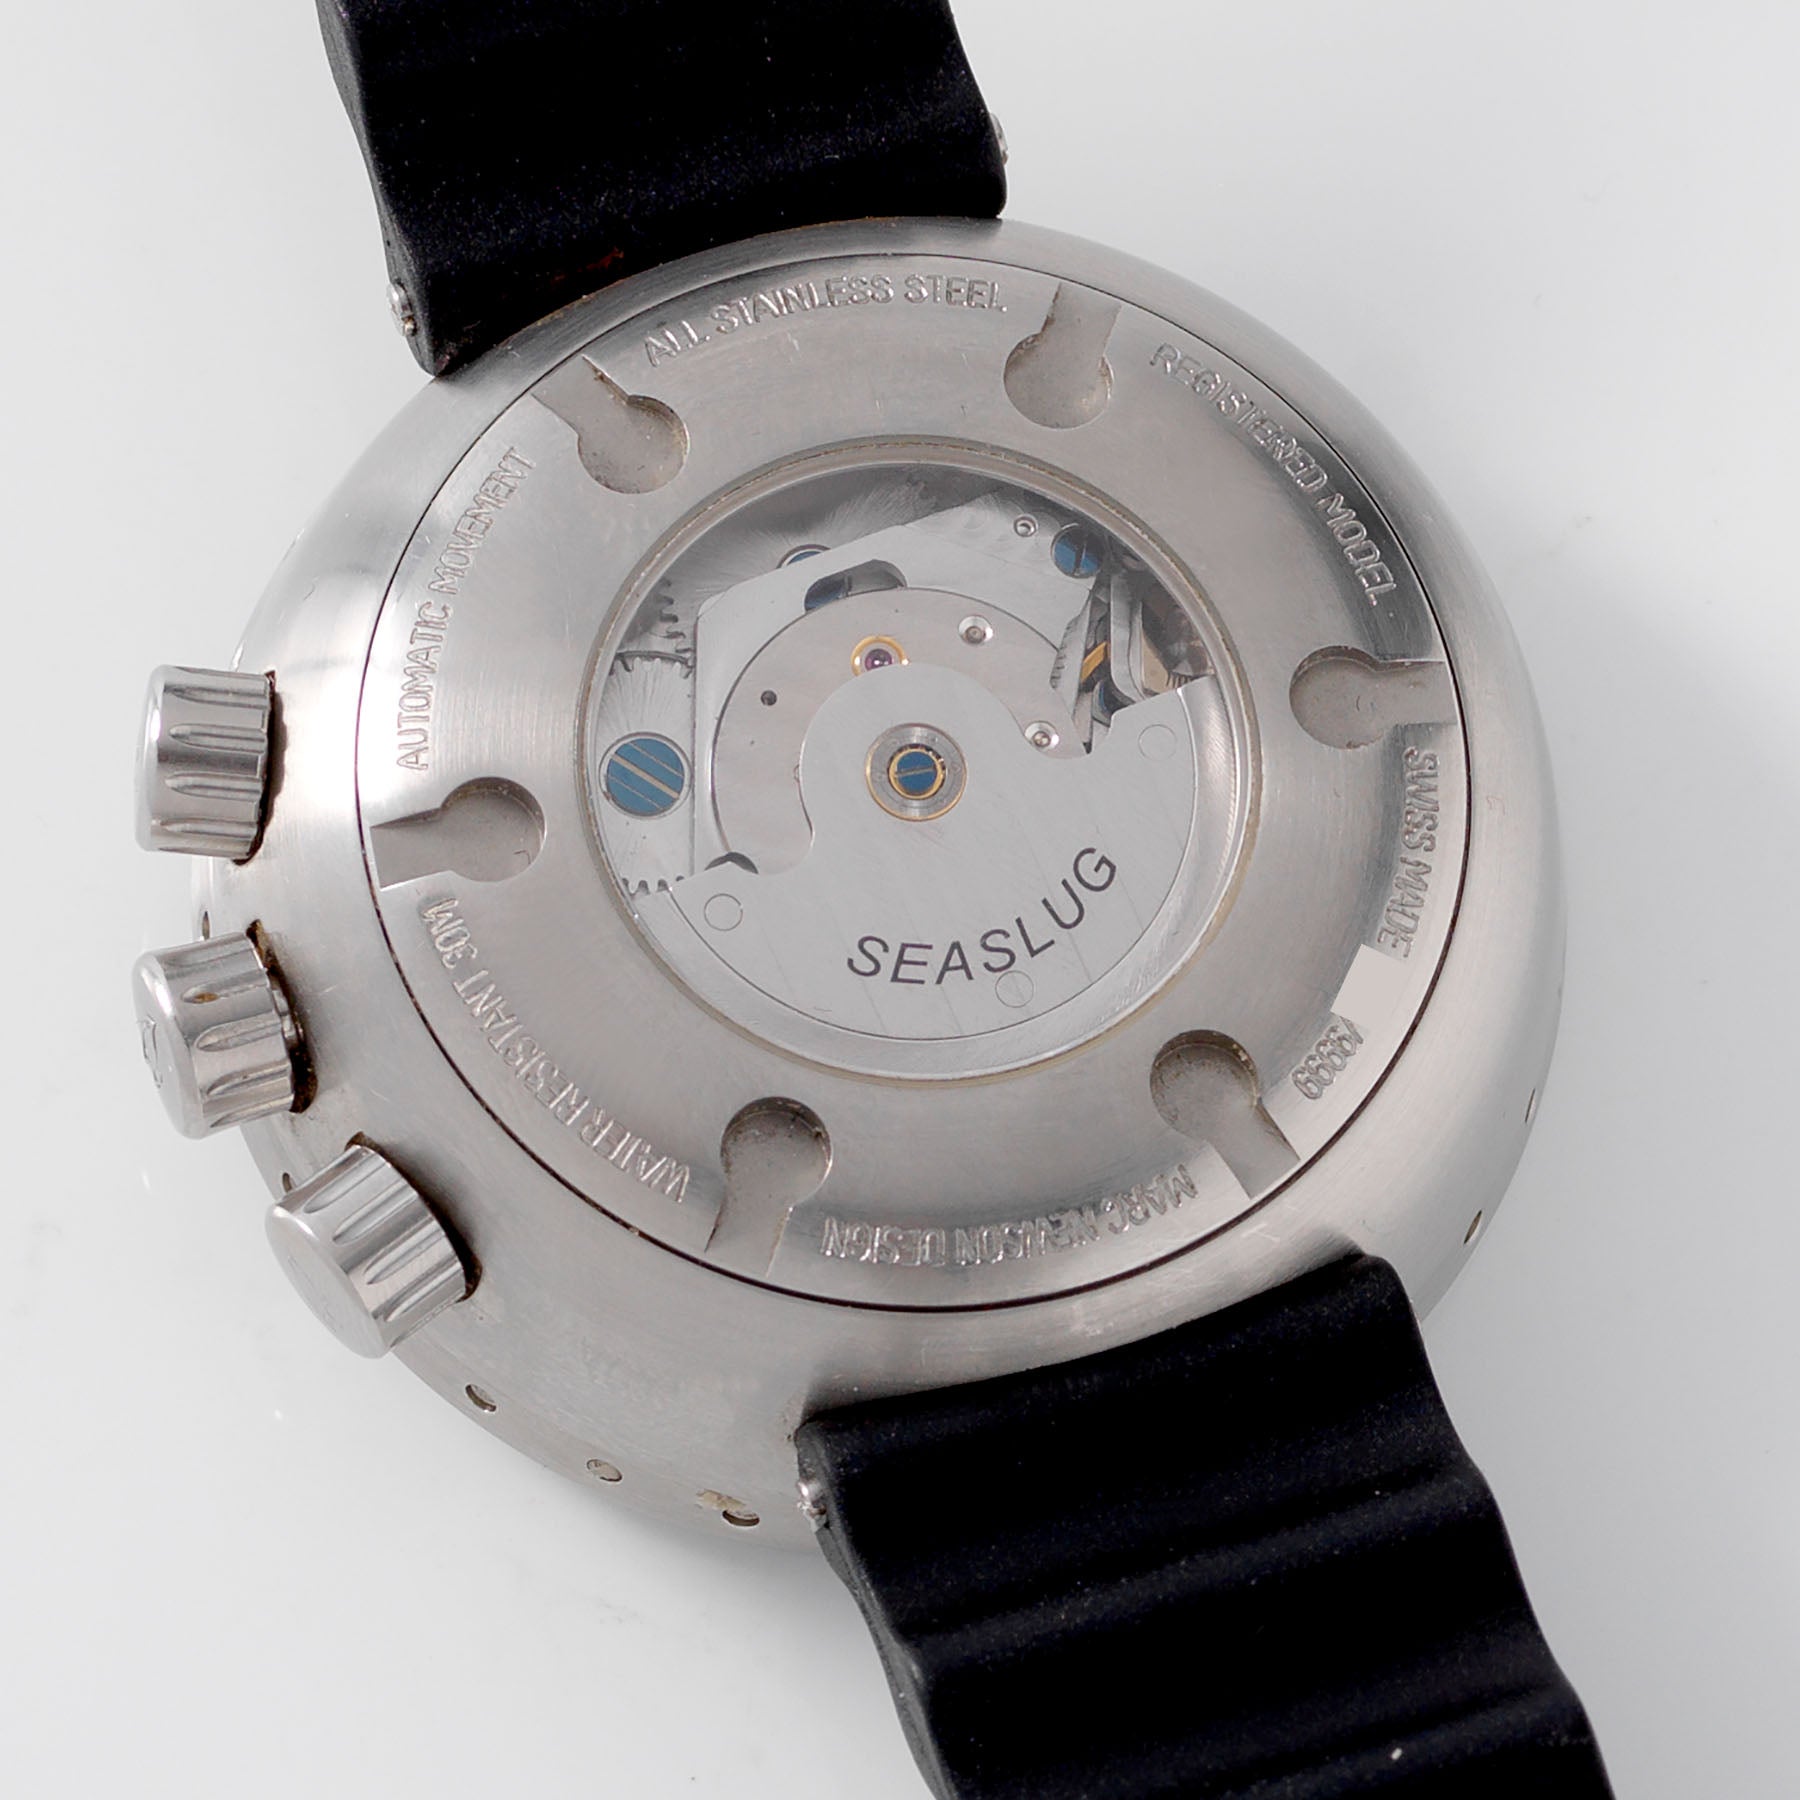 Ikepod by Marc Newson - Swiss Luxury Watches